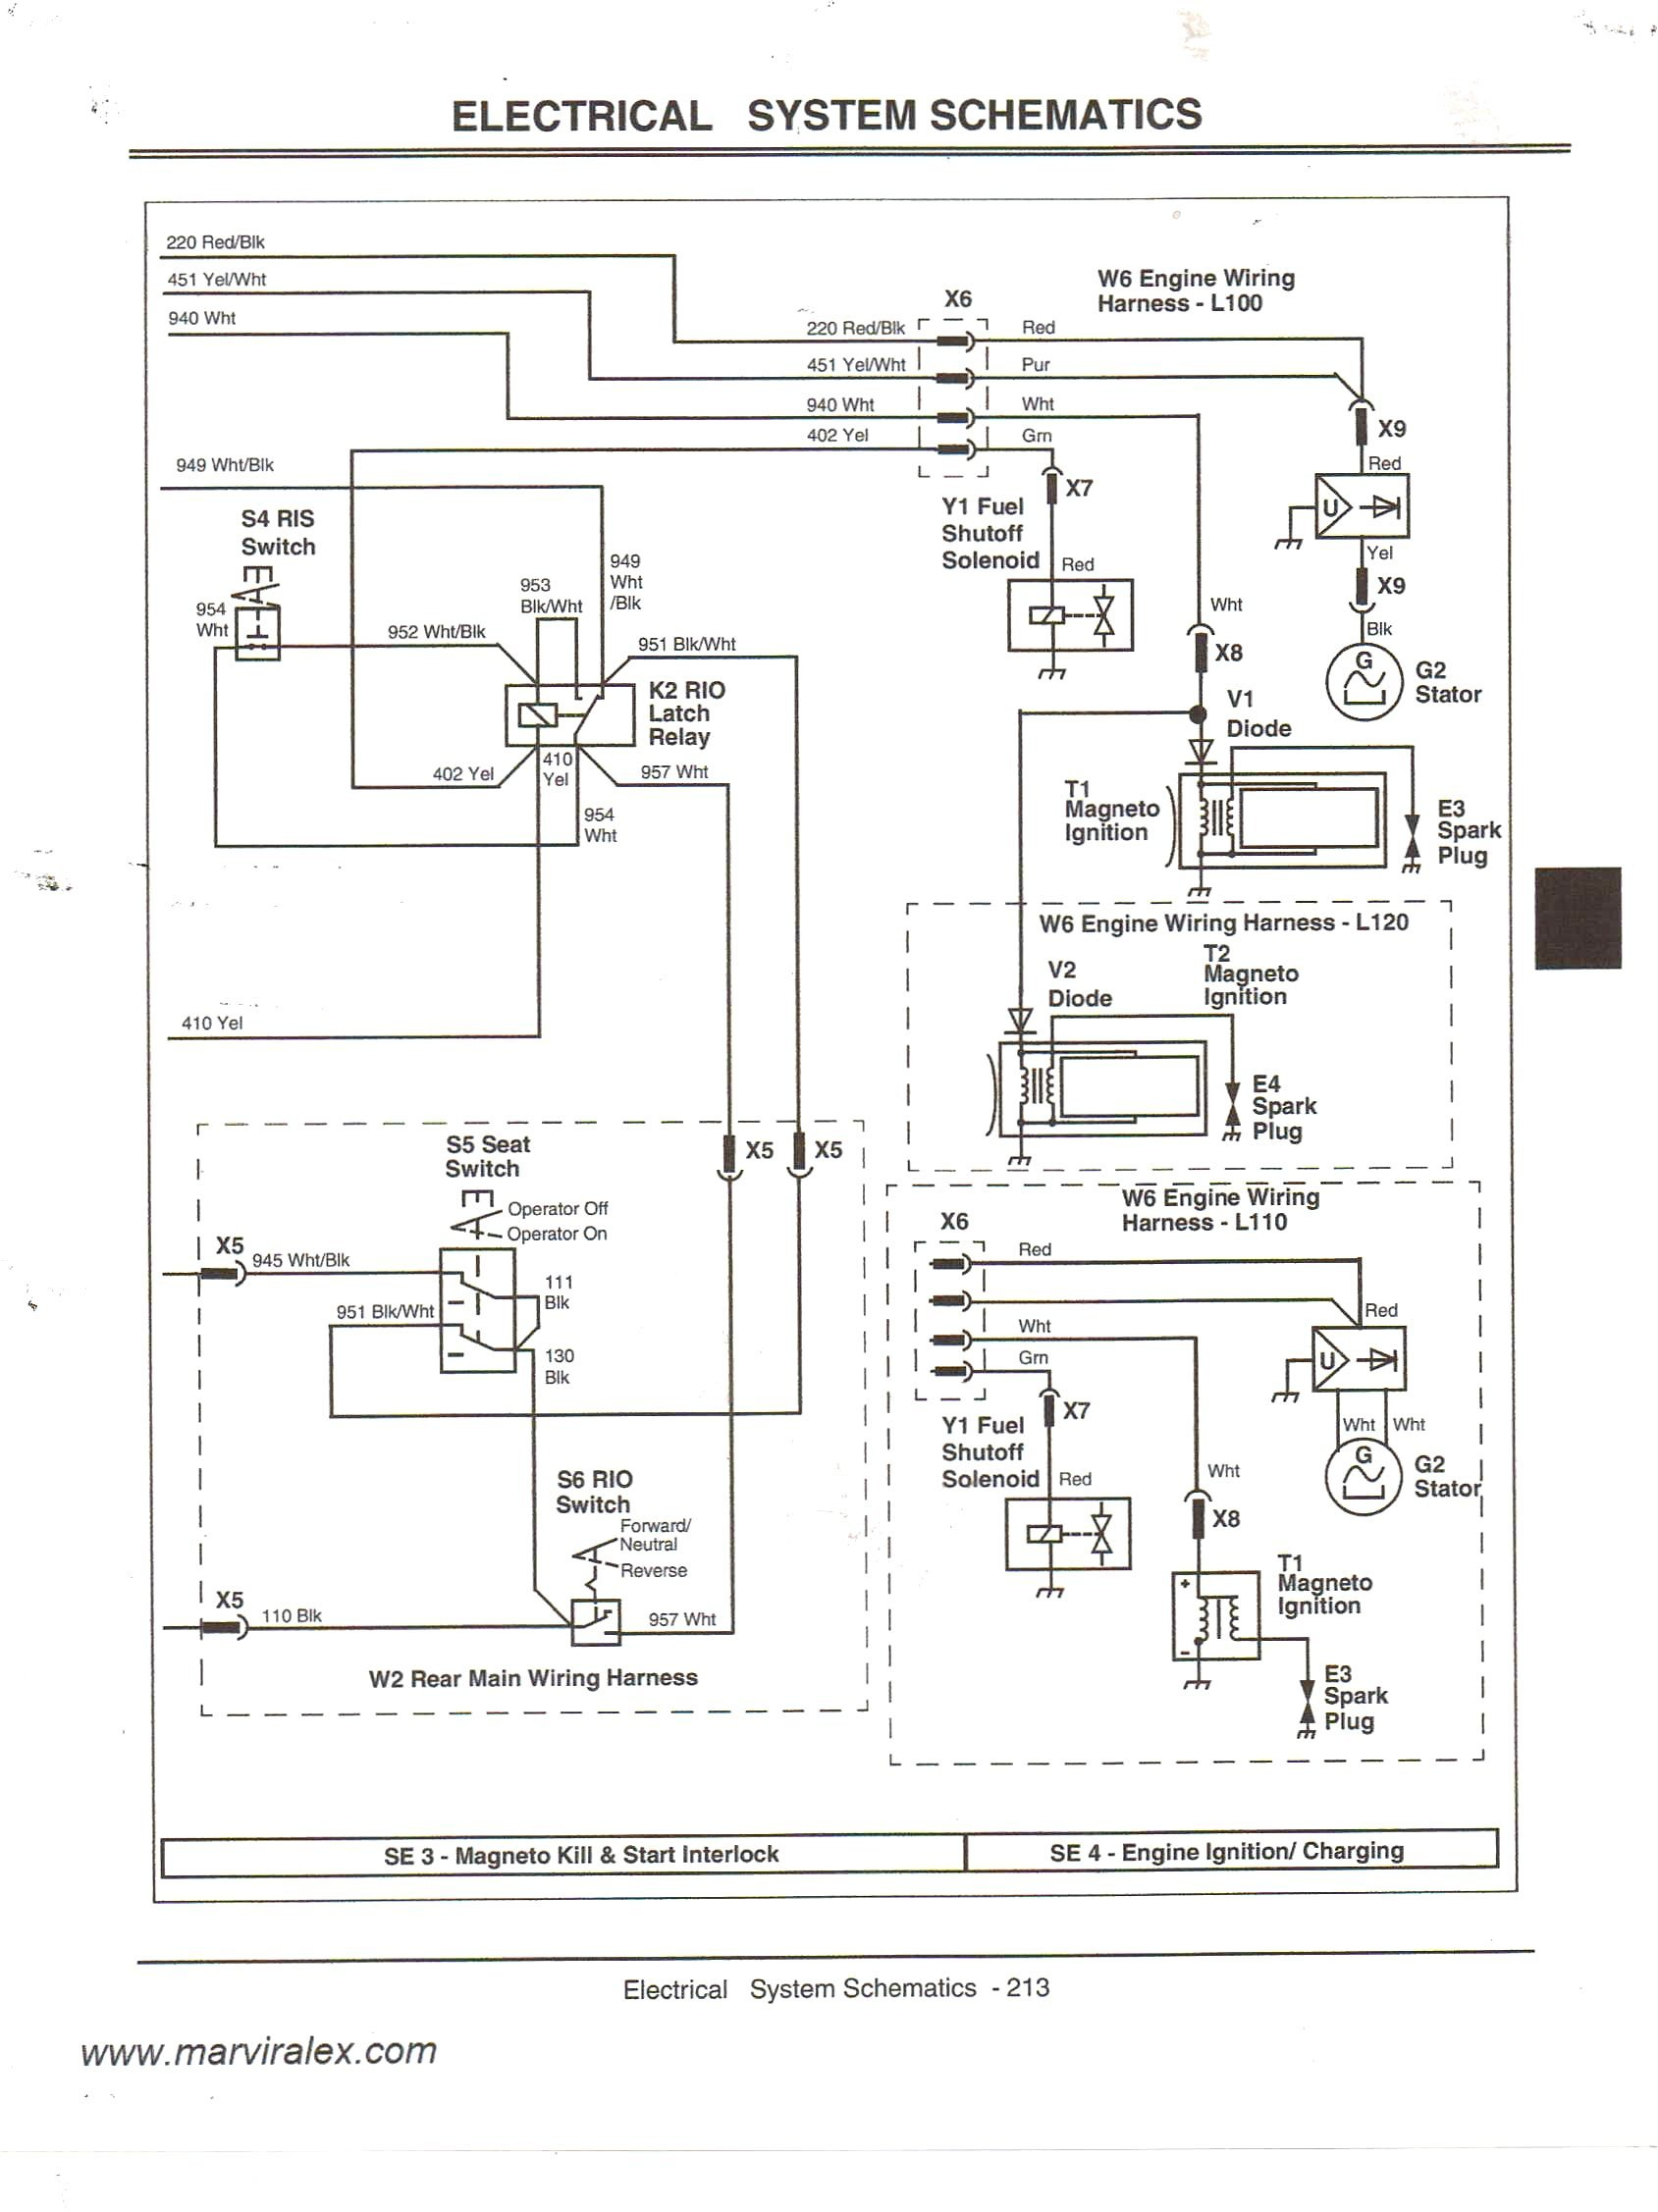 Lt155 Wiring Schematic | Manual E-Books - John Deere Lt155 Wiring Diagram